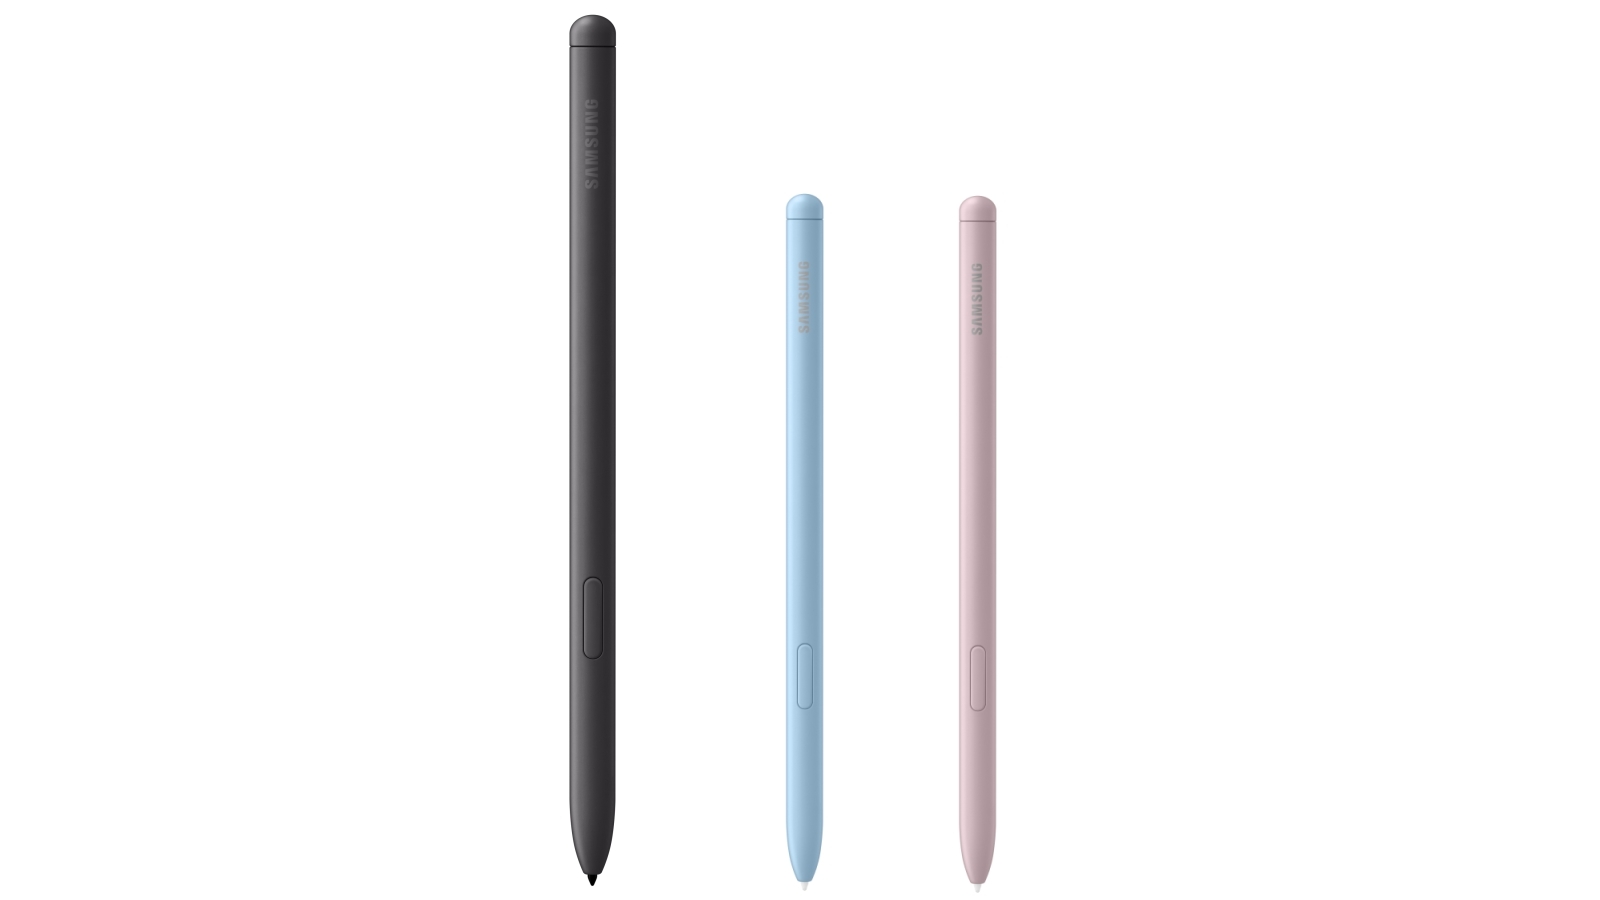 Samsung Galaxy Tab S6 Lite S Pen